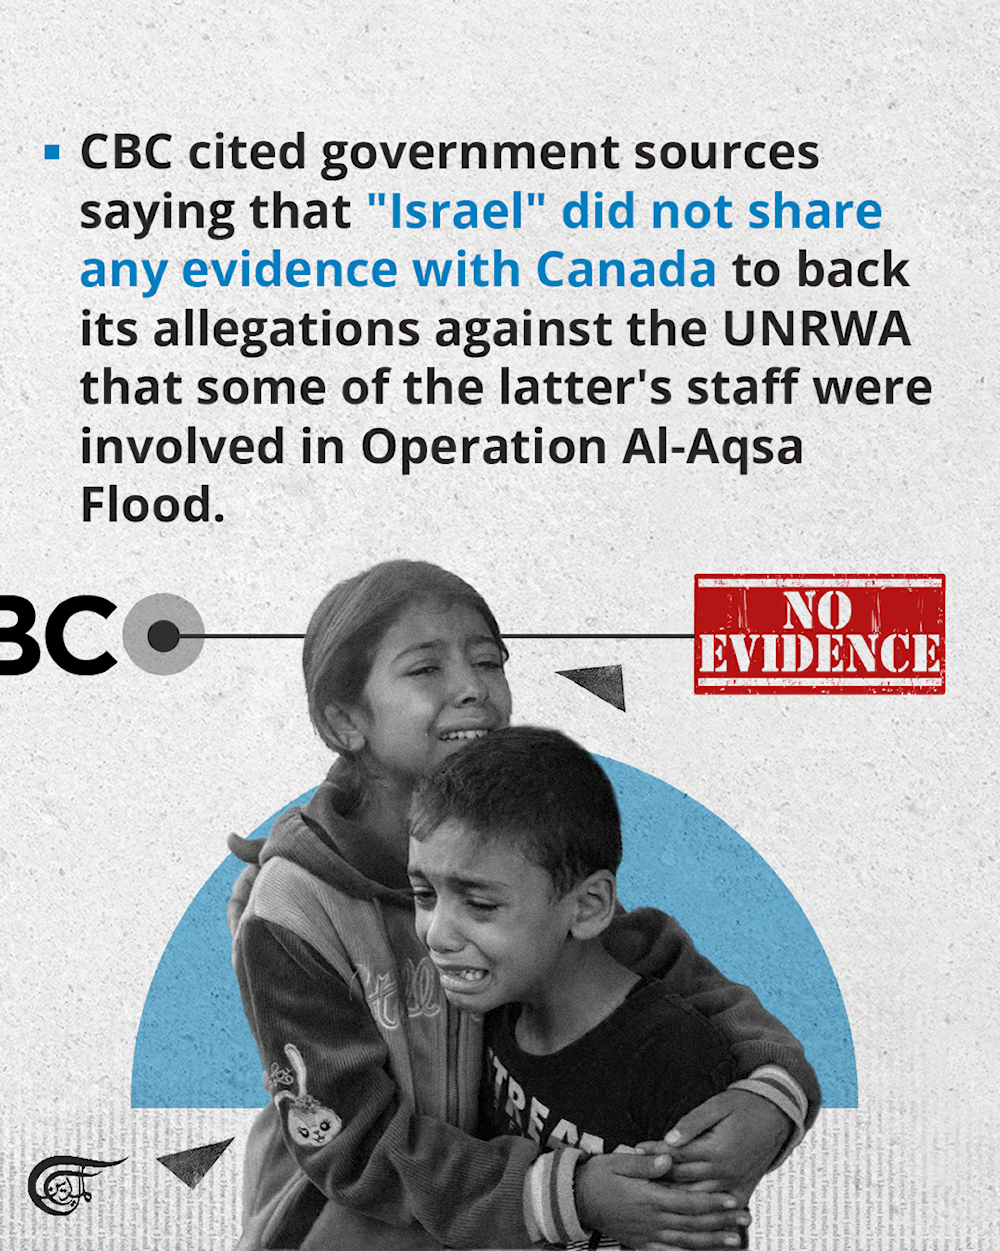 Israeli accusations against UNRWA crumbling